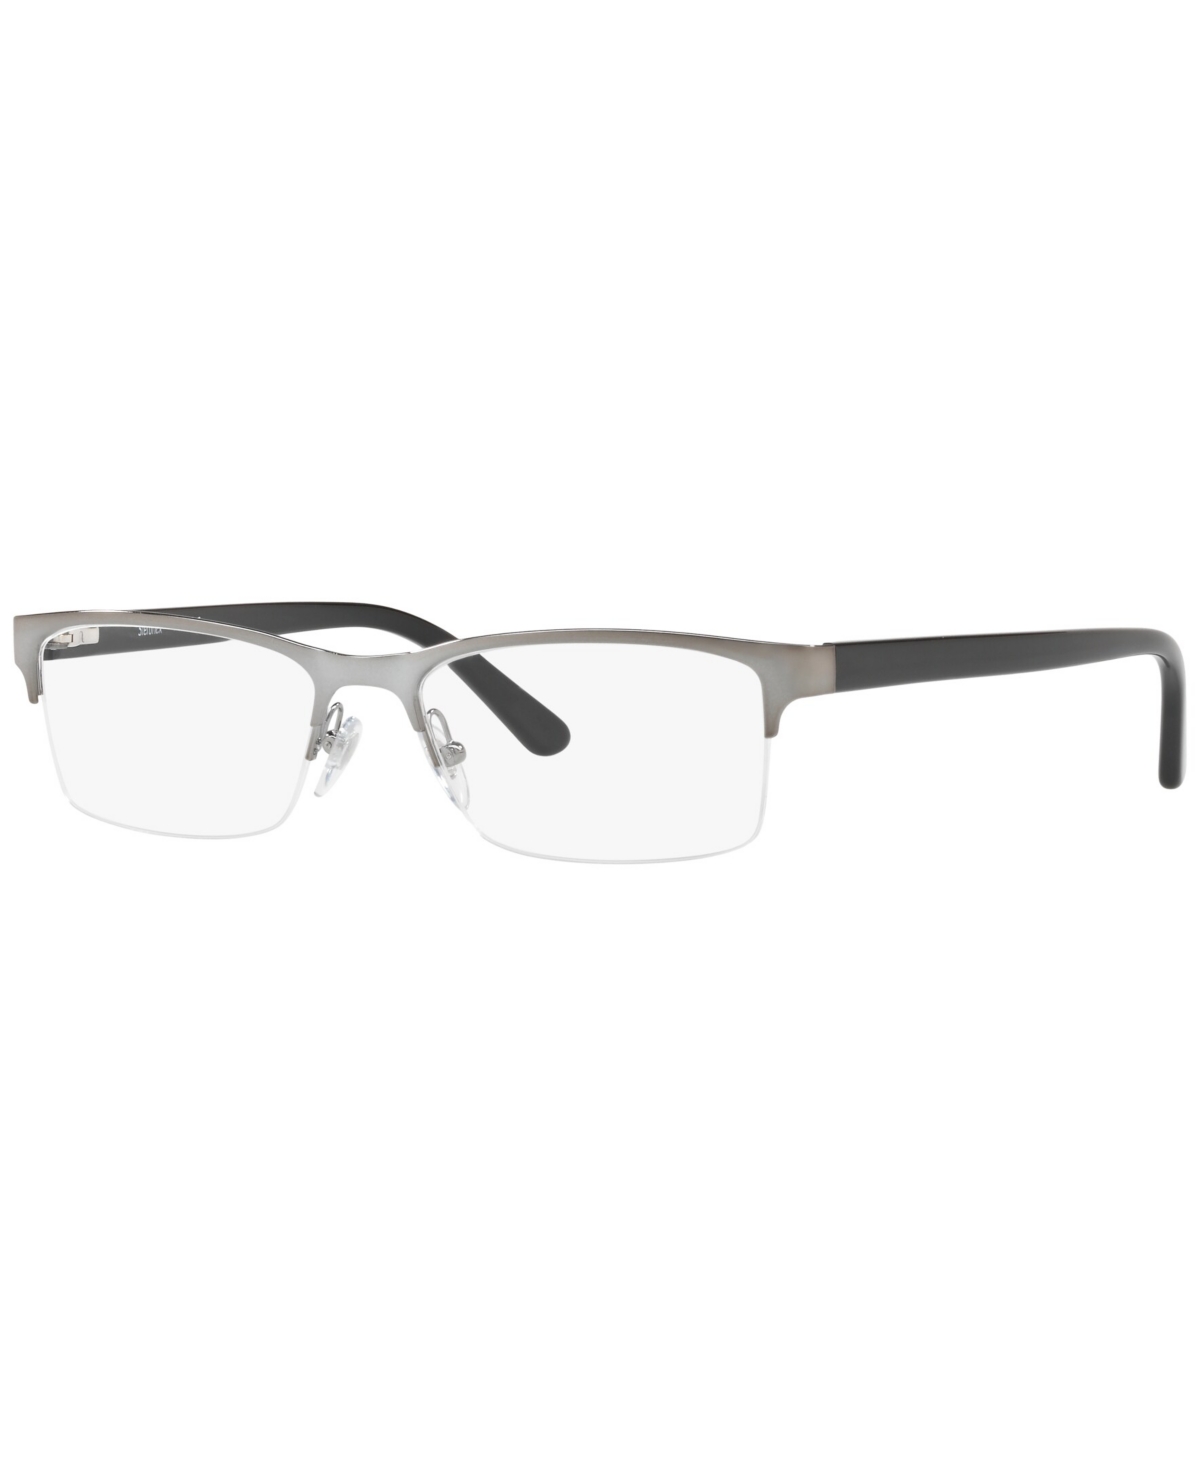 Steroflex Men's Eyeglasses, SF2288 - Gunmetal